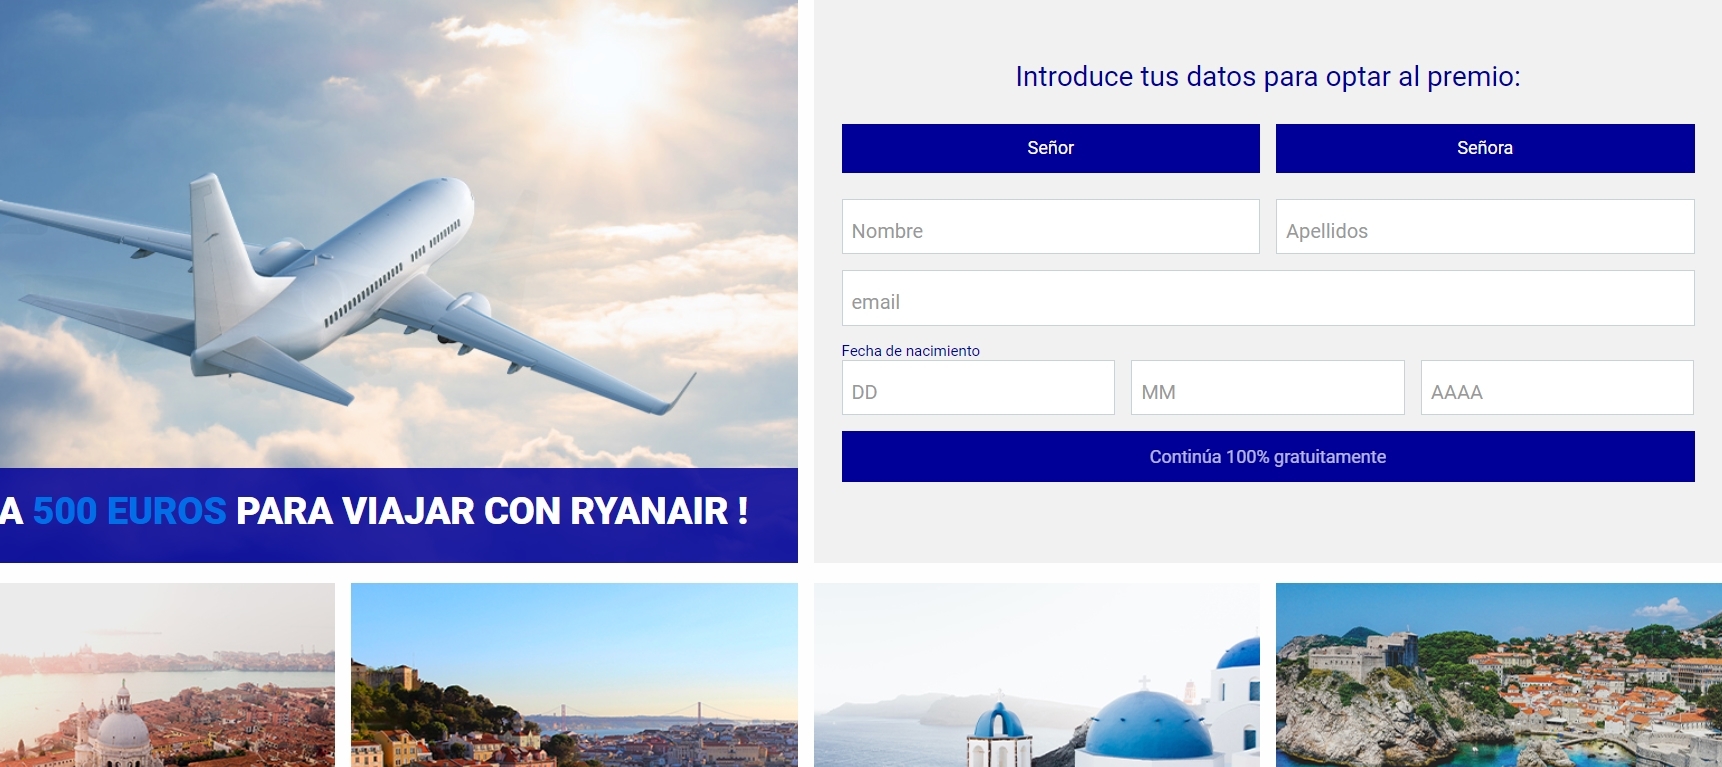 [SOI] ES | Win Ryanair 500 euros